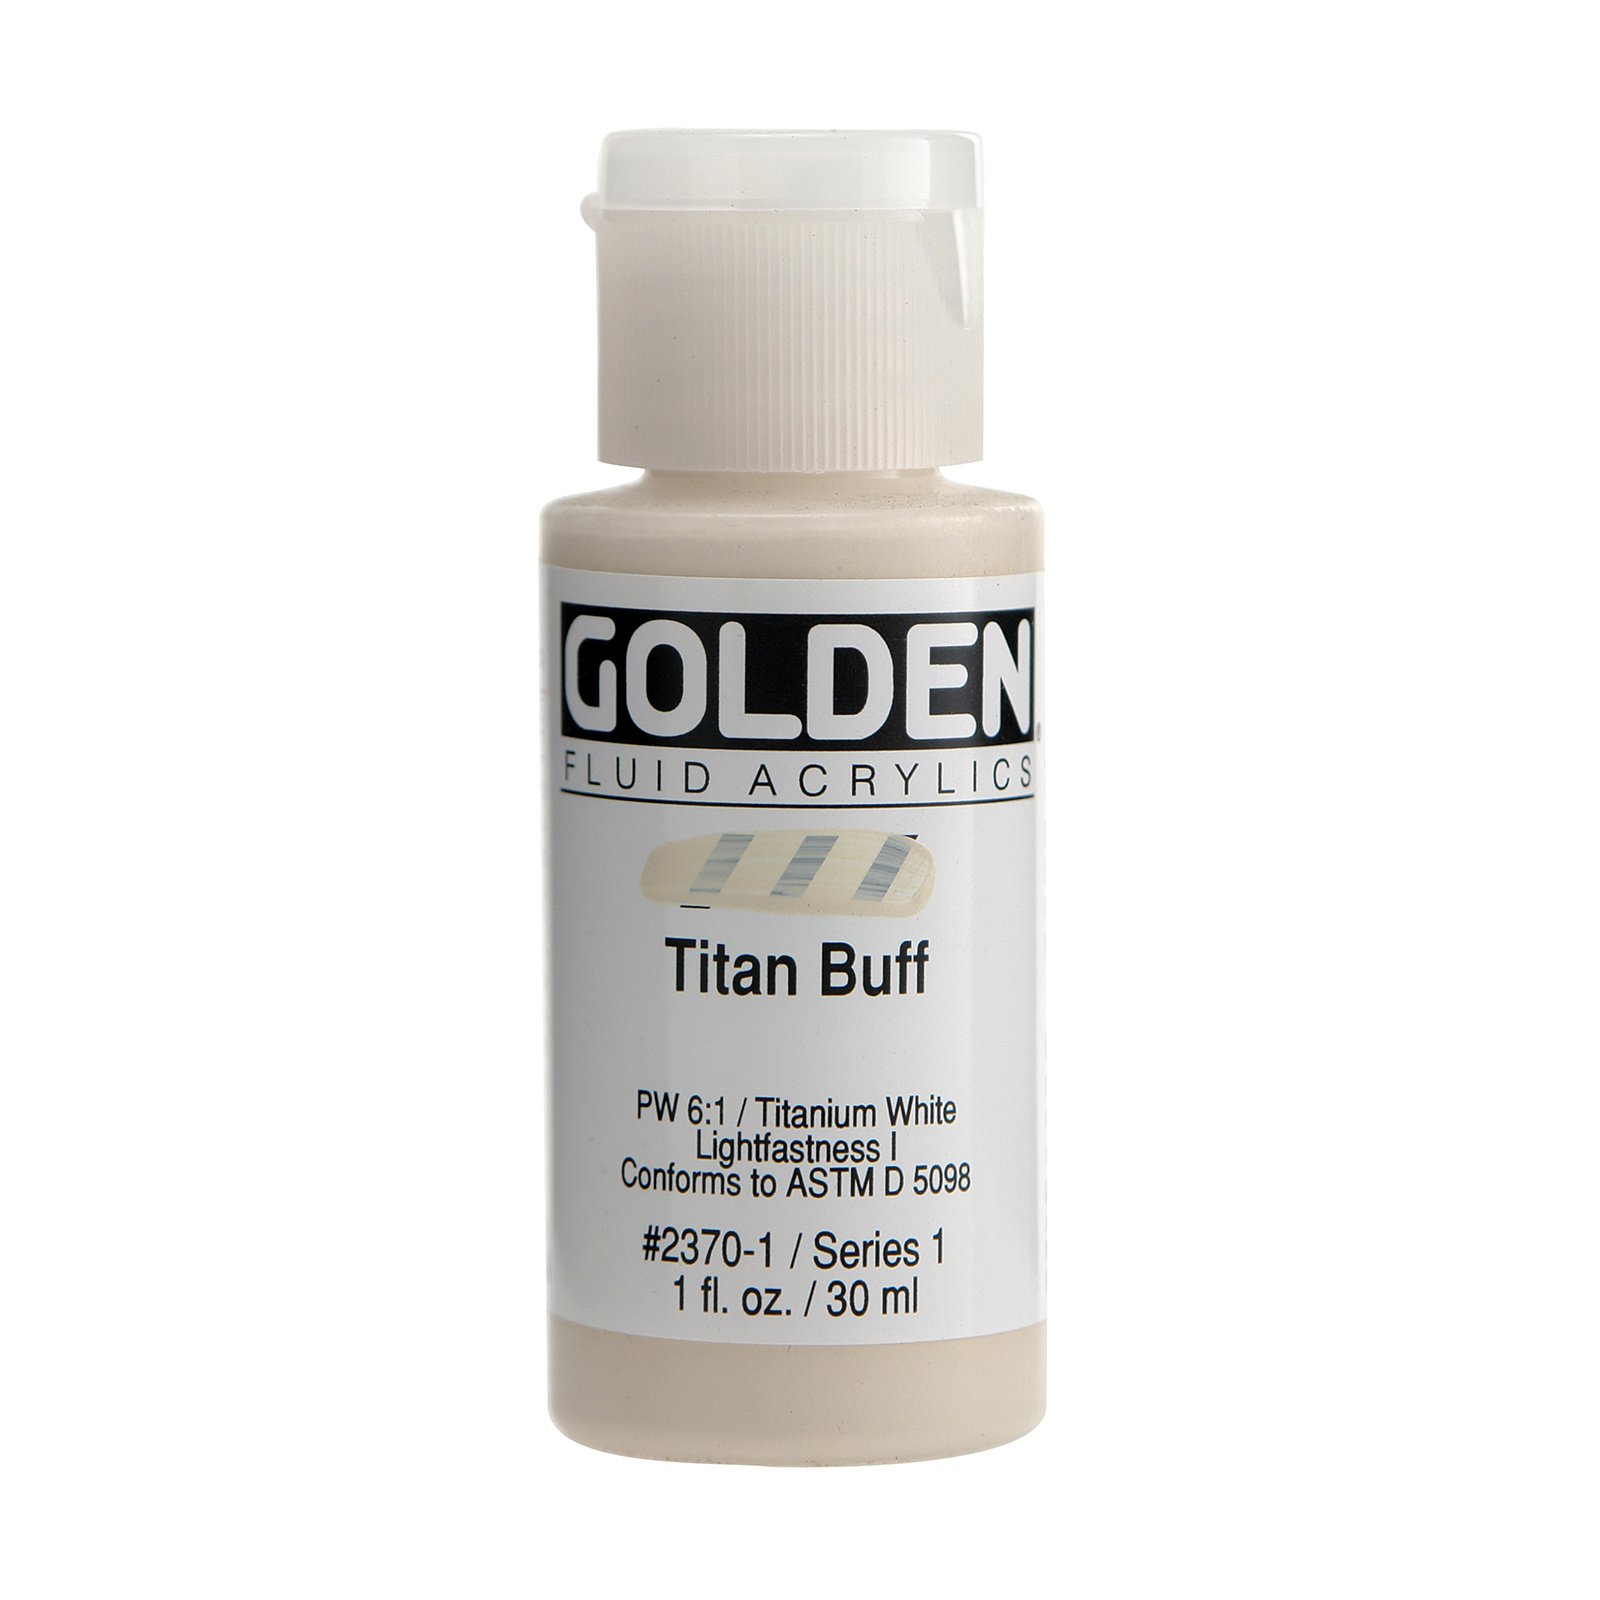 Golden Fluid Acrylics, 1 oz. Bottles, Titan Buff